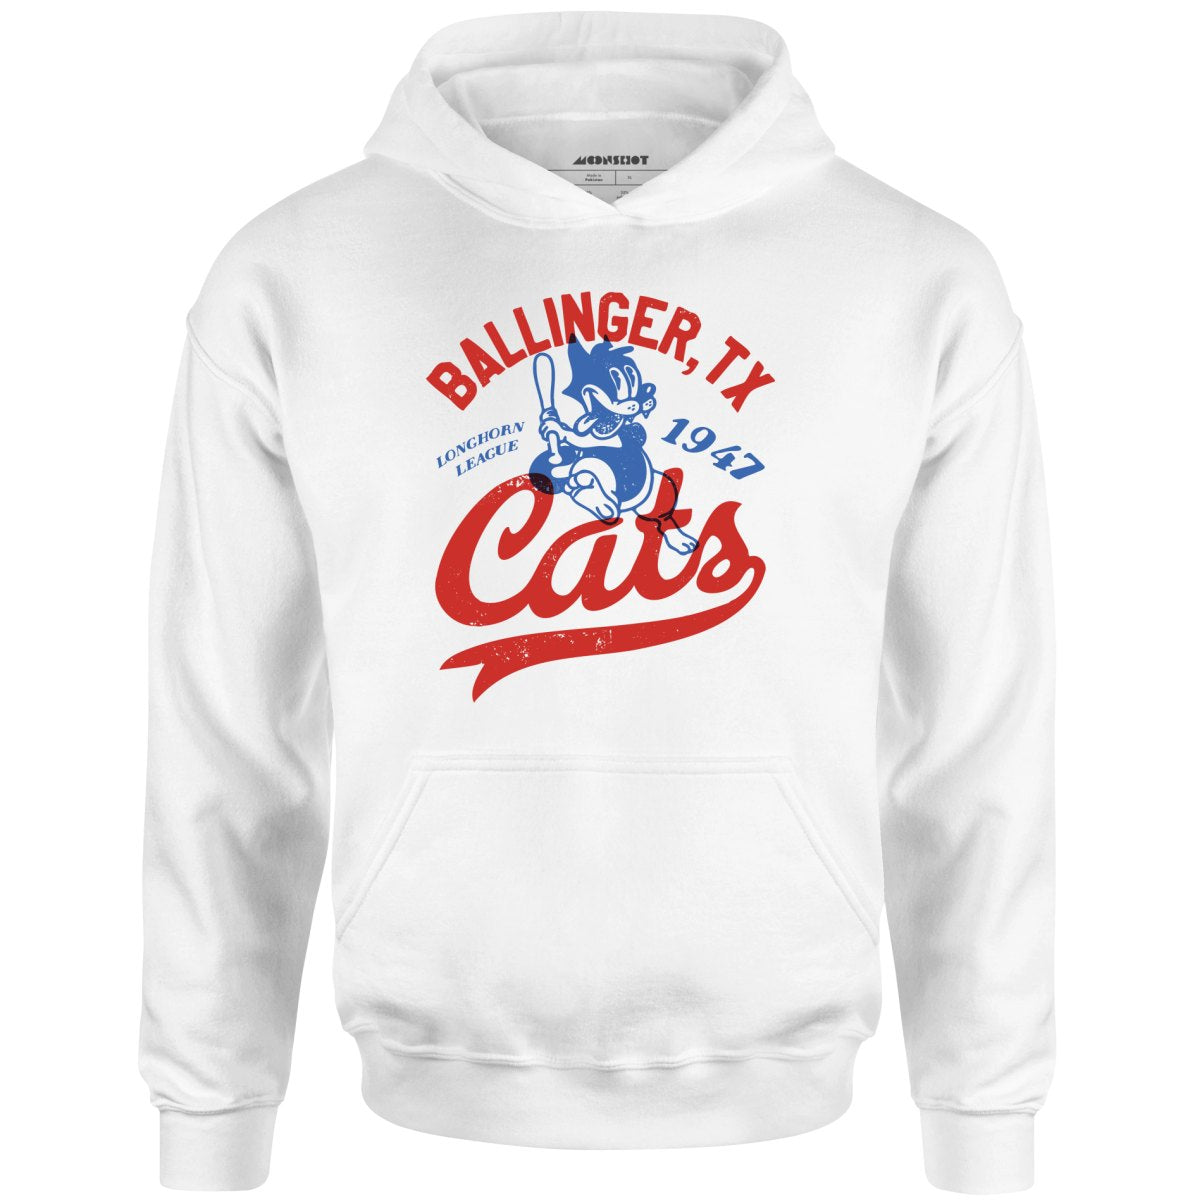 Ballinger Cats - Texas - Vintage Defunct Baseball Teams - Unisex Hoodie